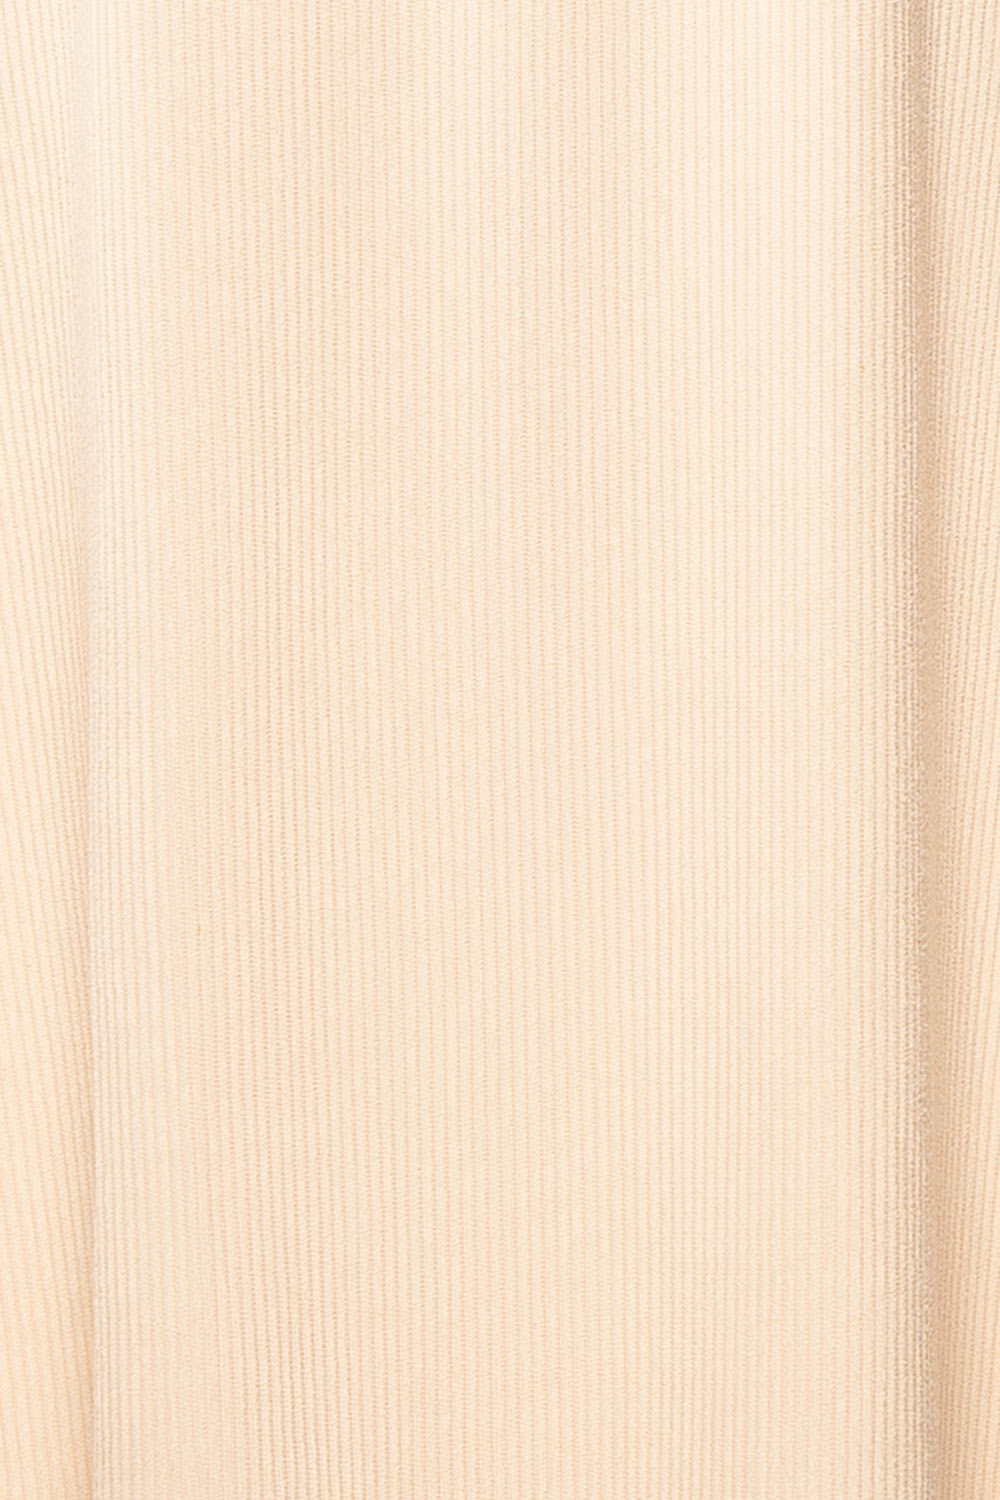 Elvandra Beige Corduroy A-line Midi Skirt | Boutique 1861 fabric 